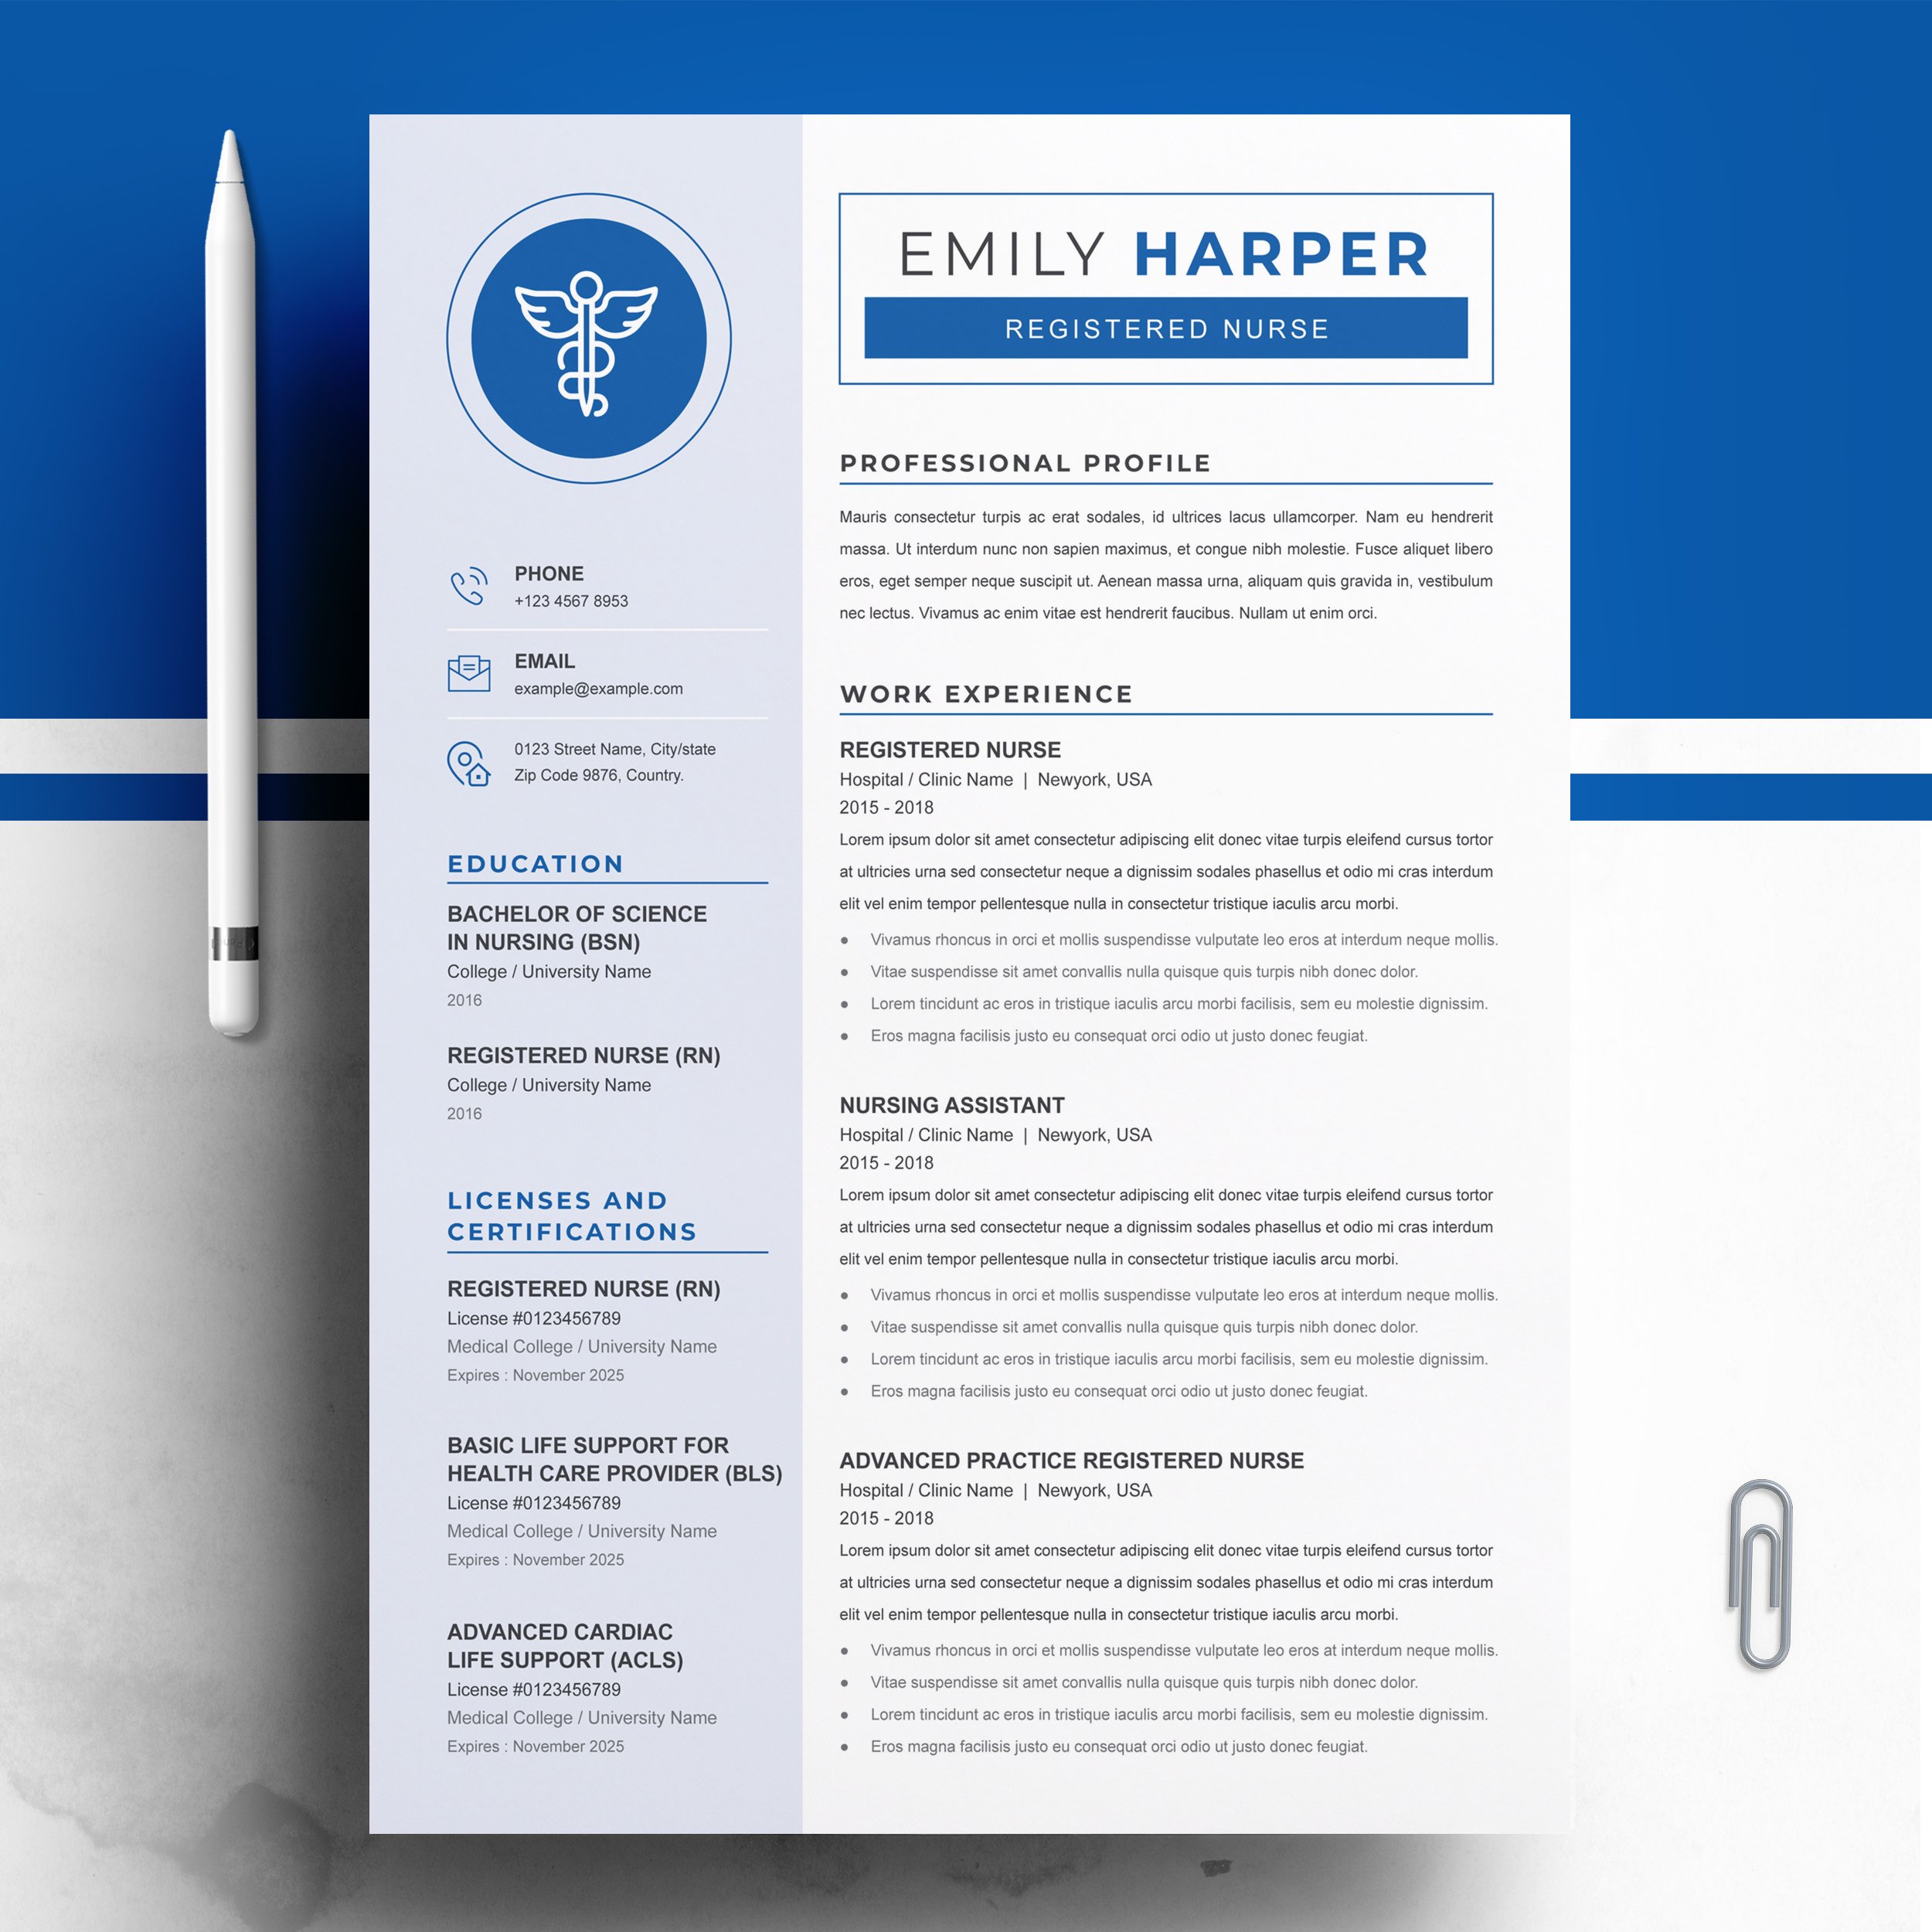 Registered Nurse Resume/CV Template cover image.